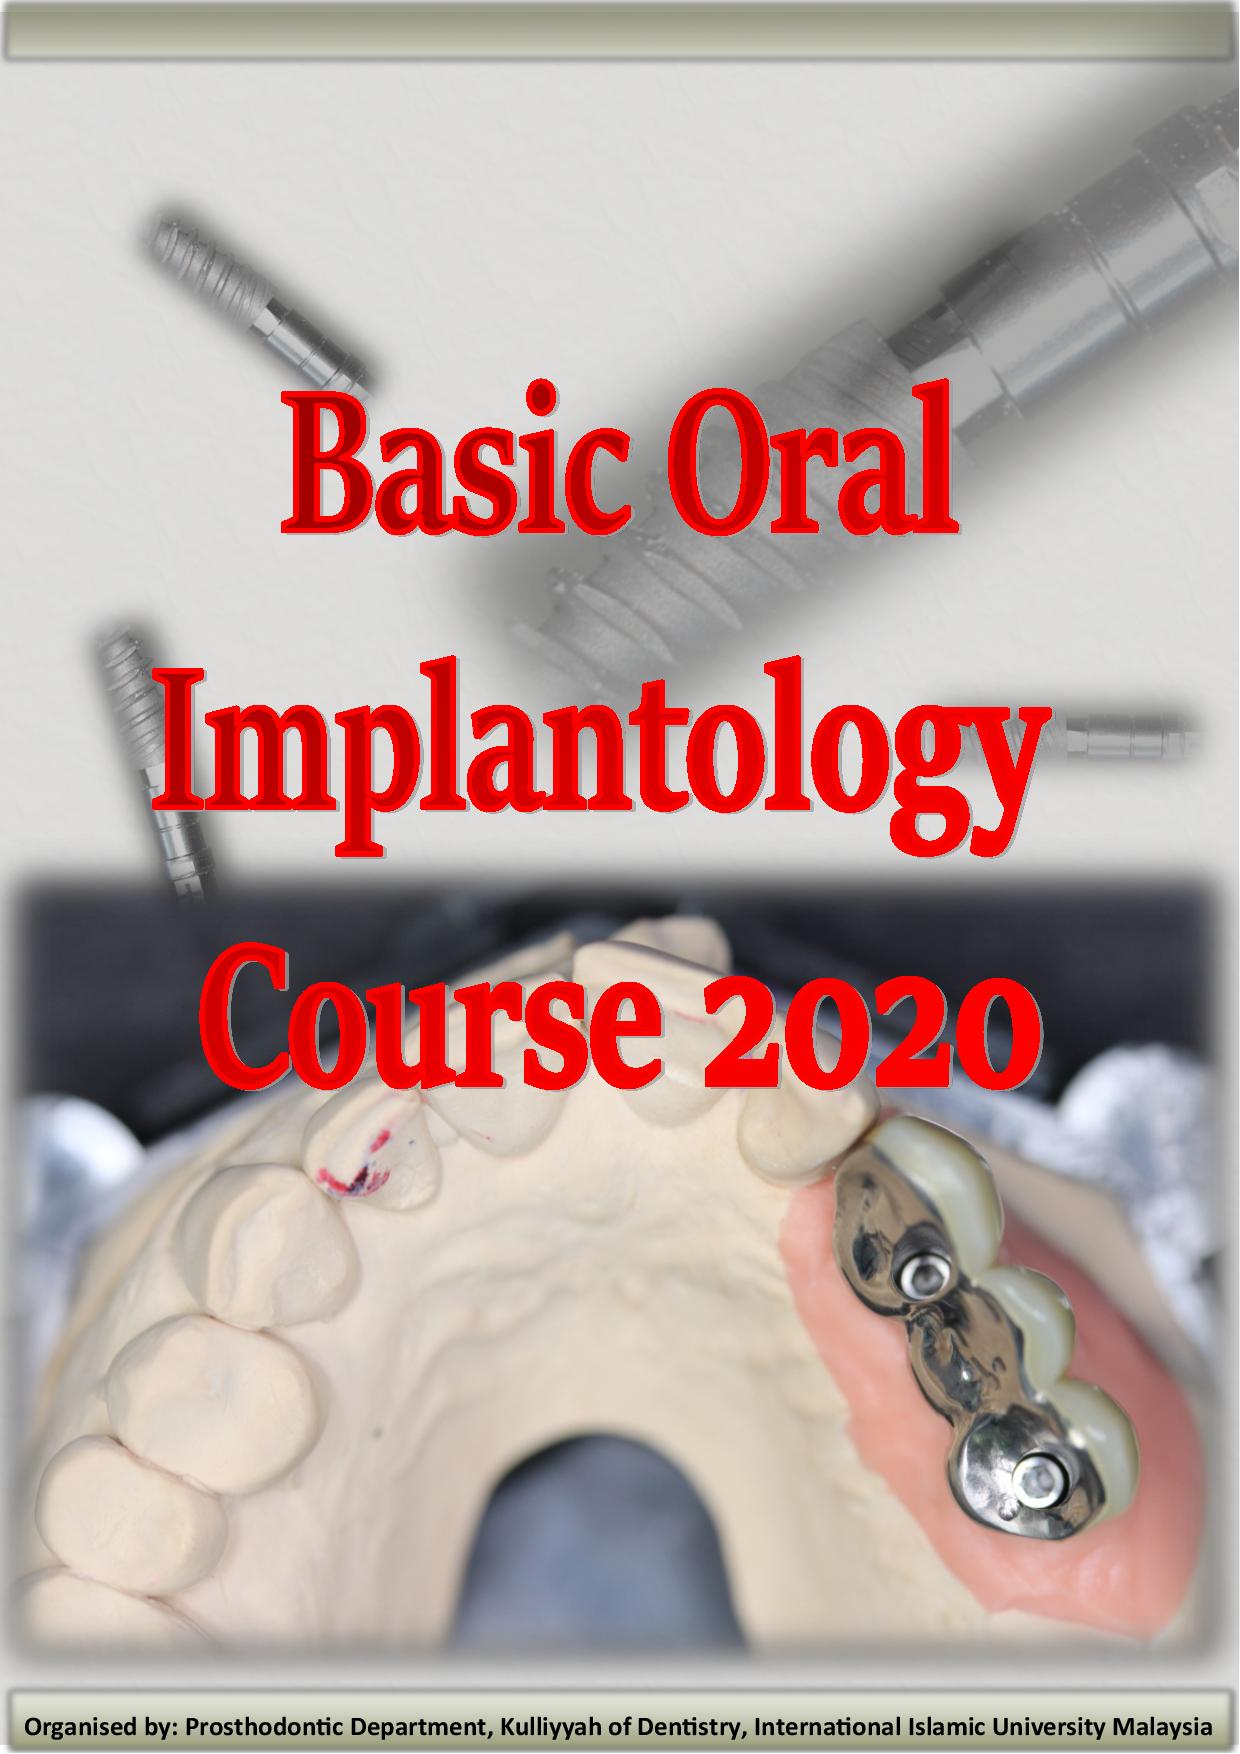 Basic Oral Implantology Course 2020